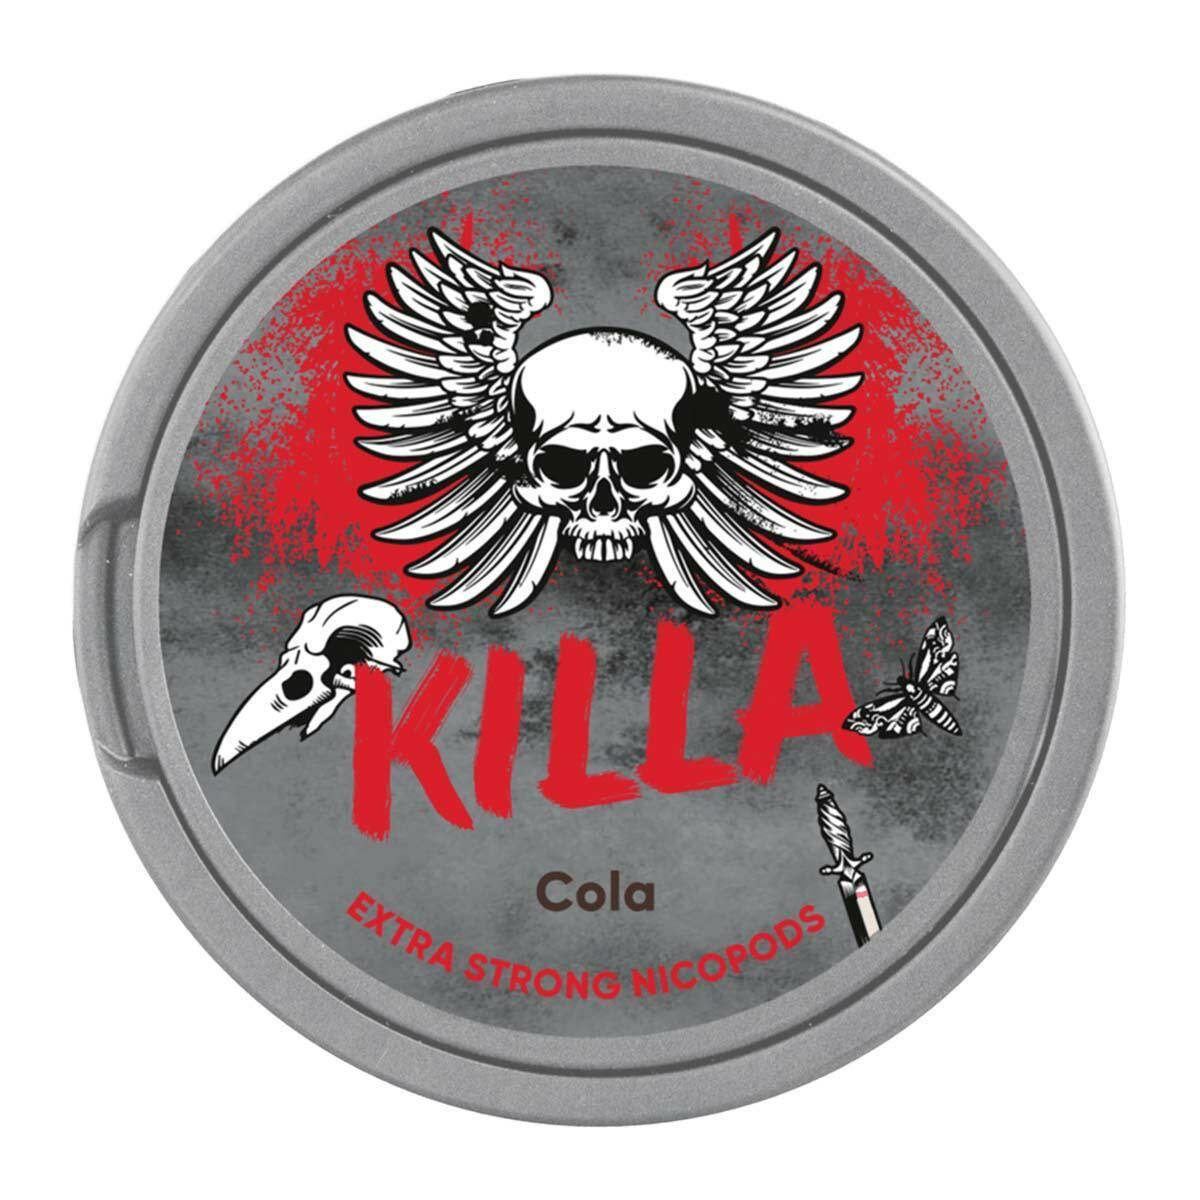 Nicotine Pouches Killa - Cola 16mg/g